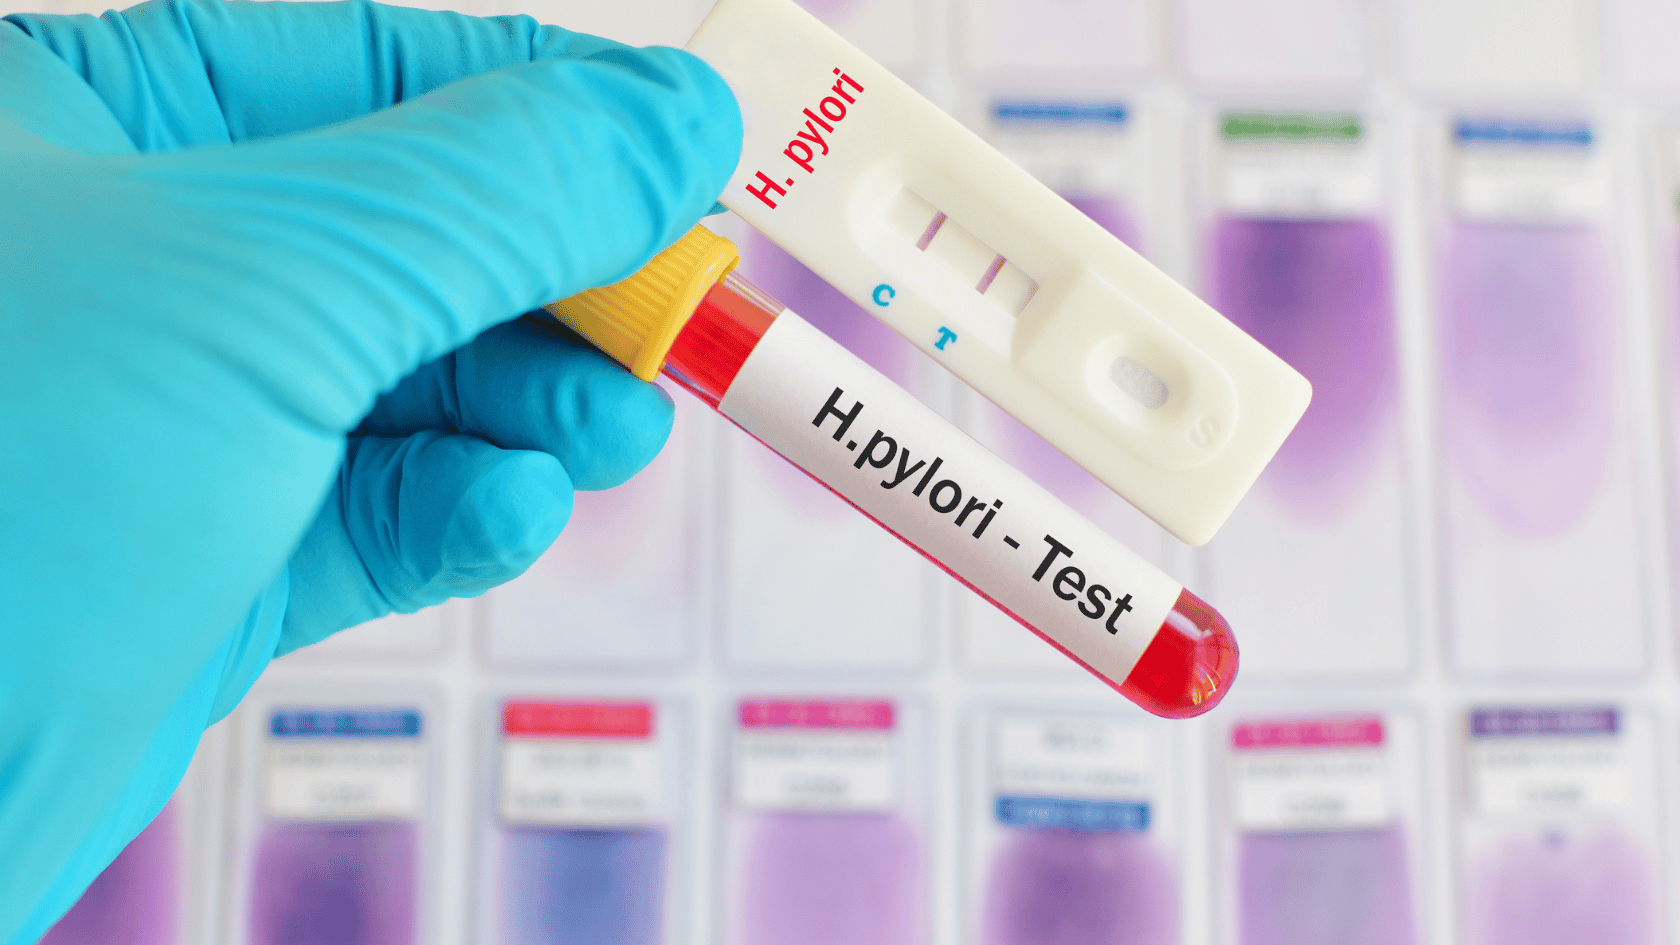 H. Pylori test